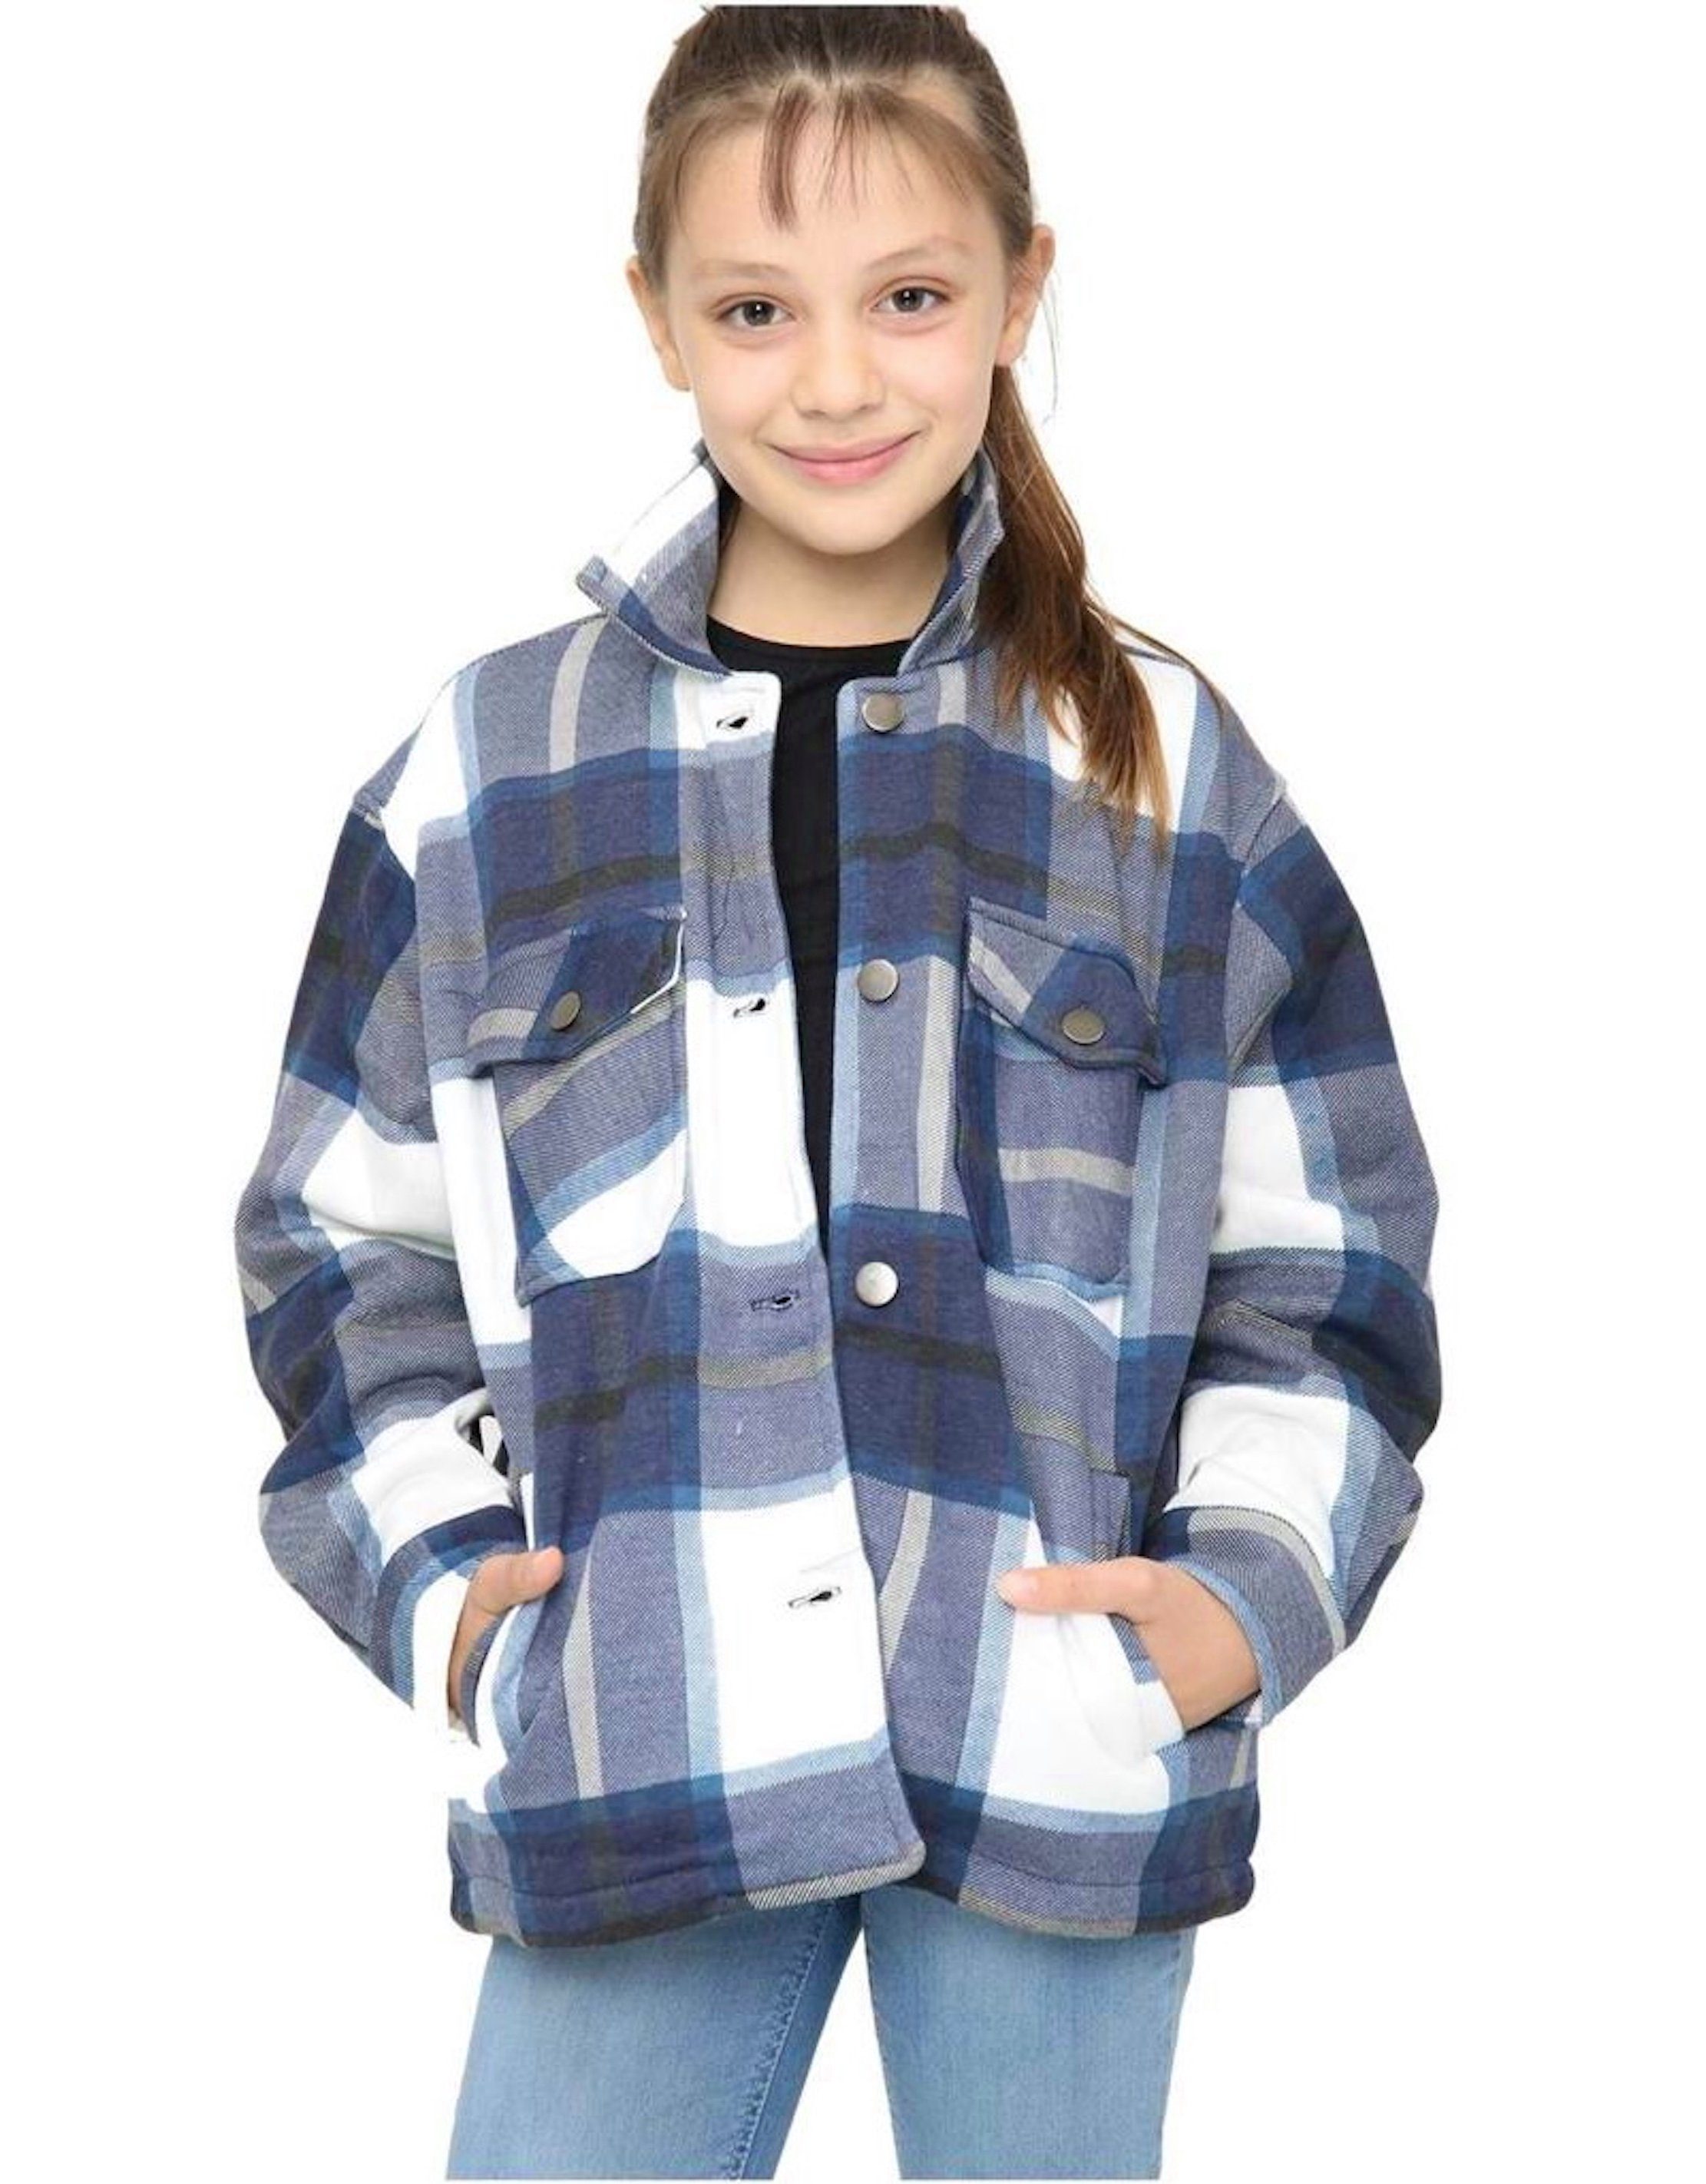 Worldclassca Karohemd Worldclassca Mädchen Karo Hemd Hemdjacke Kariert Kinder Holzfällerhemd Blau | Freizeithemden